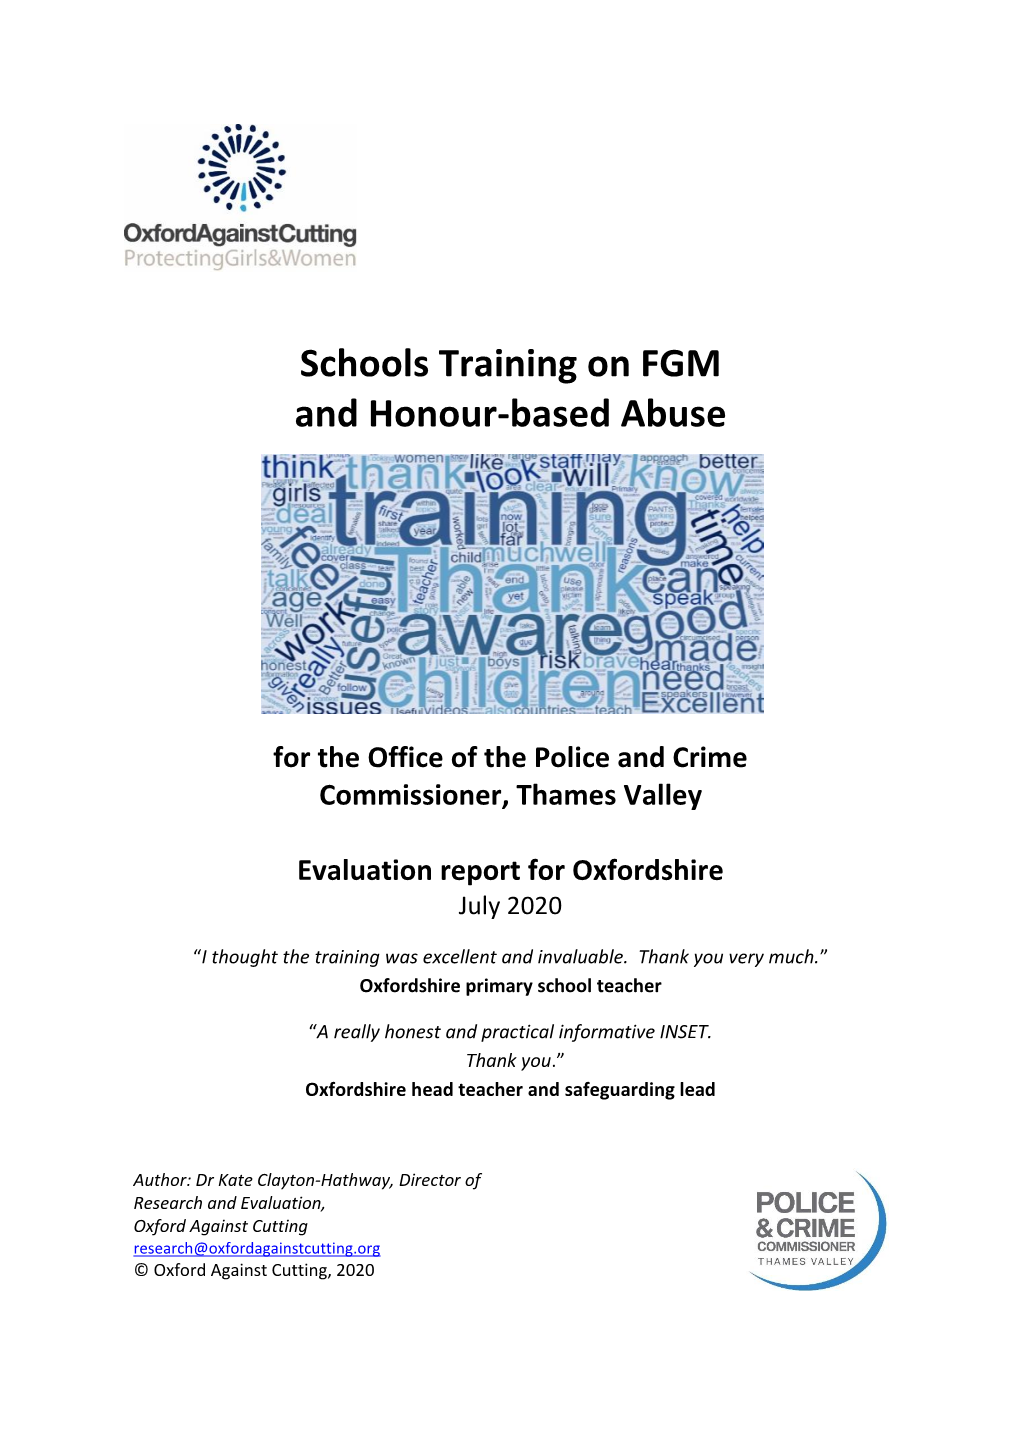 OAC Schools Evaluation Report 2020 Oxfordshire